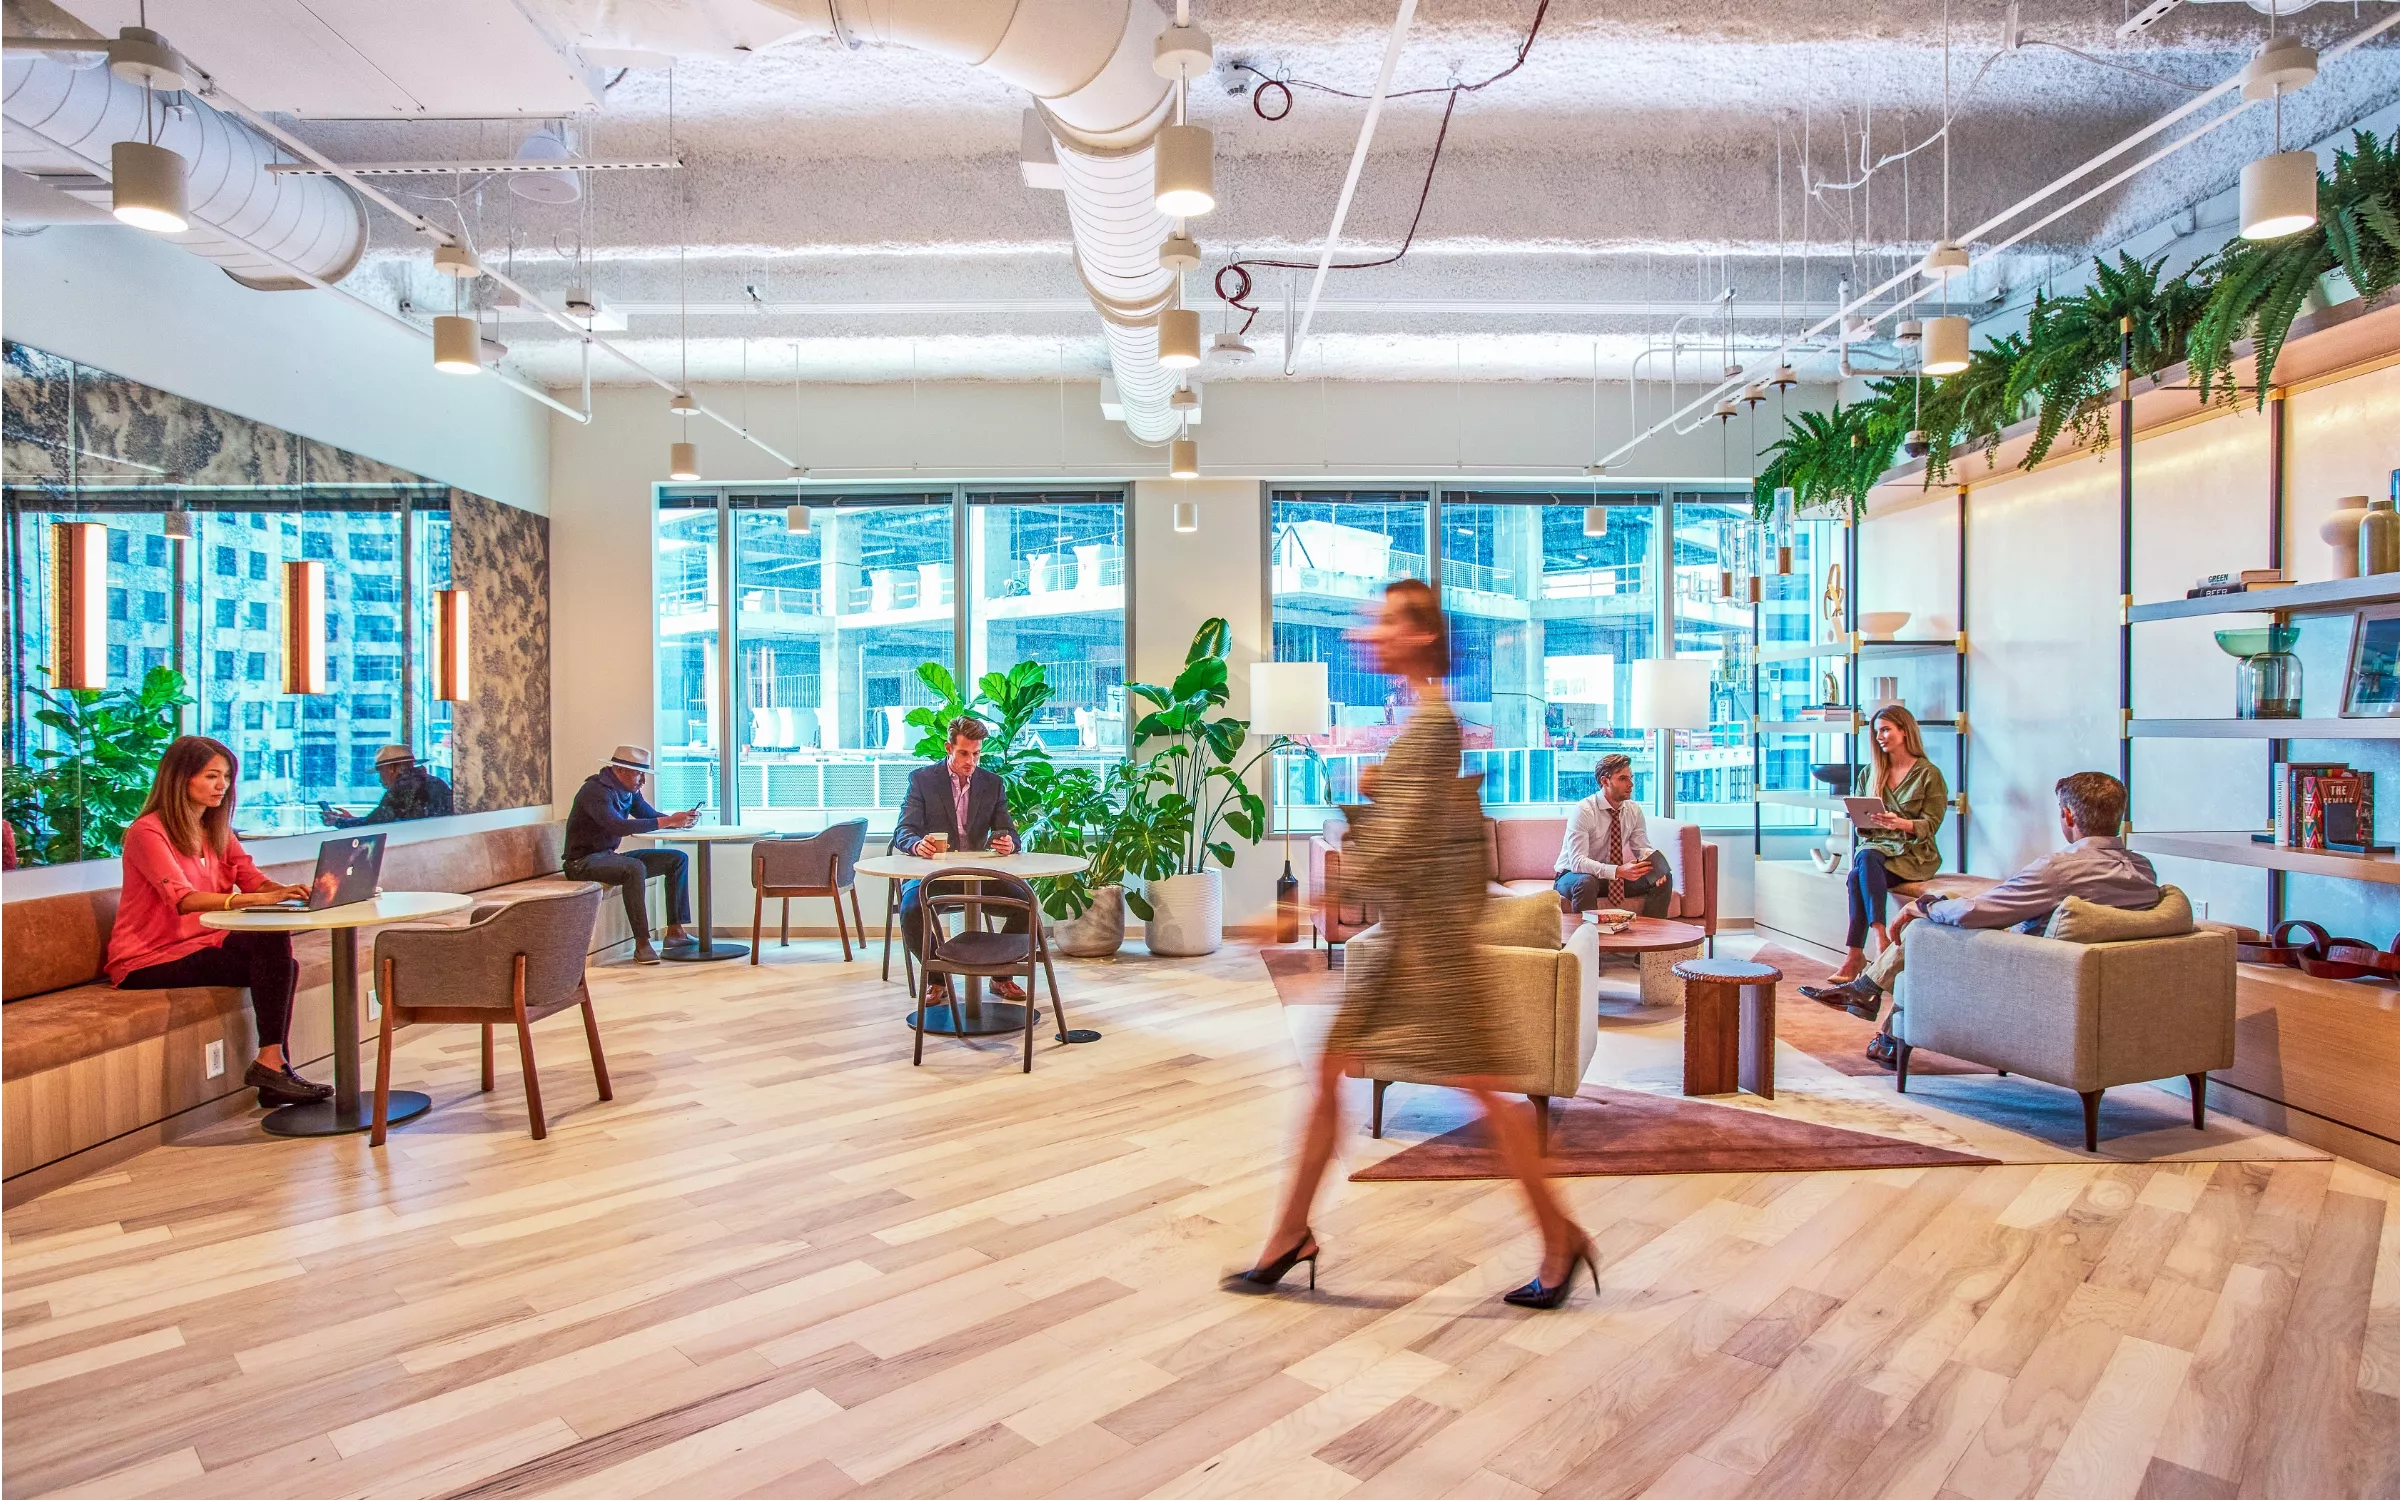 Employee priorities are reshaping office design